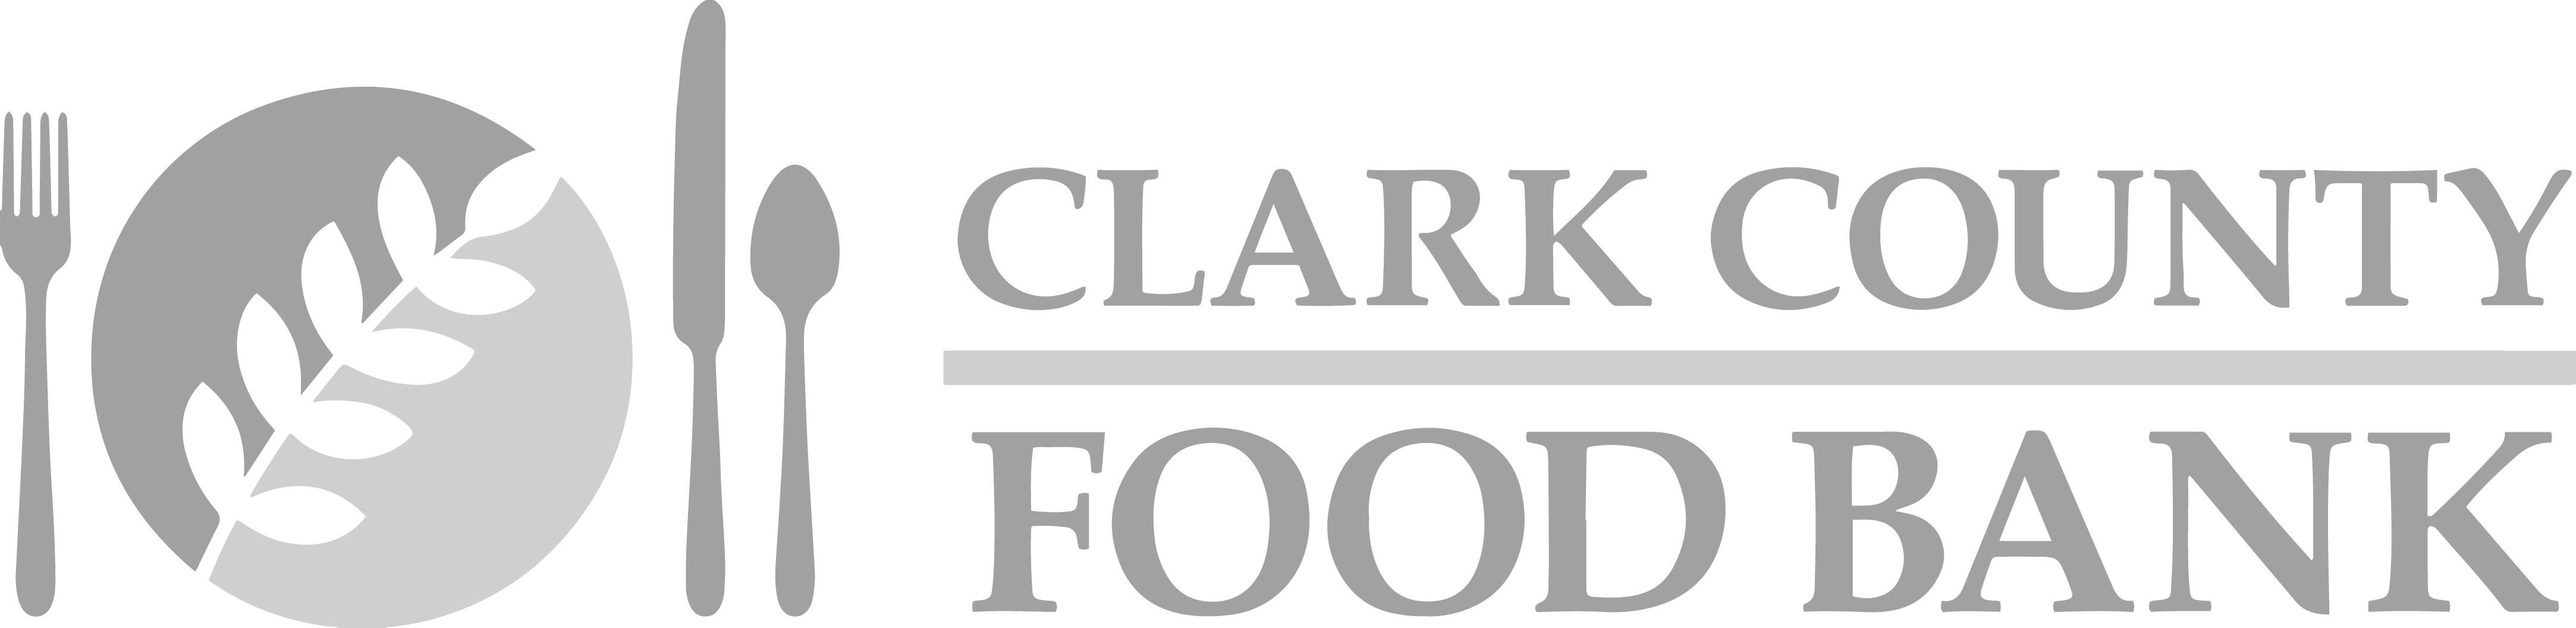 ClarkCounty-FoodBank-Horizontal-NoBackground-grey